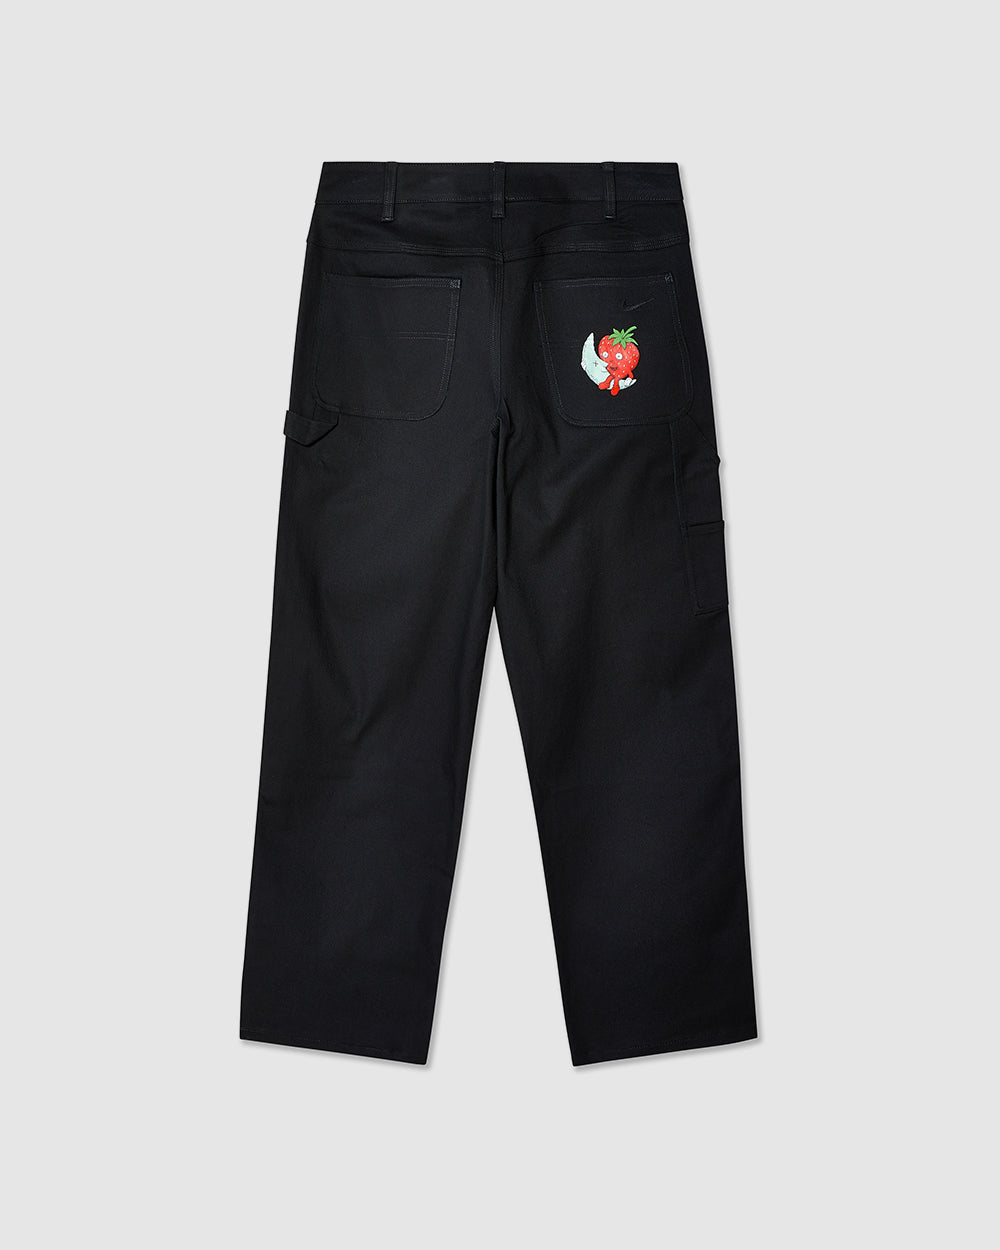 Product shot of navy pants